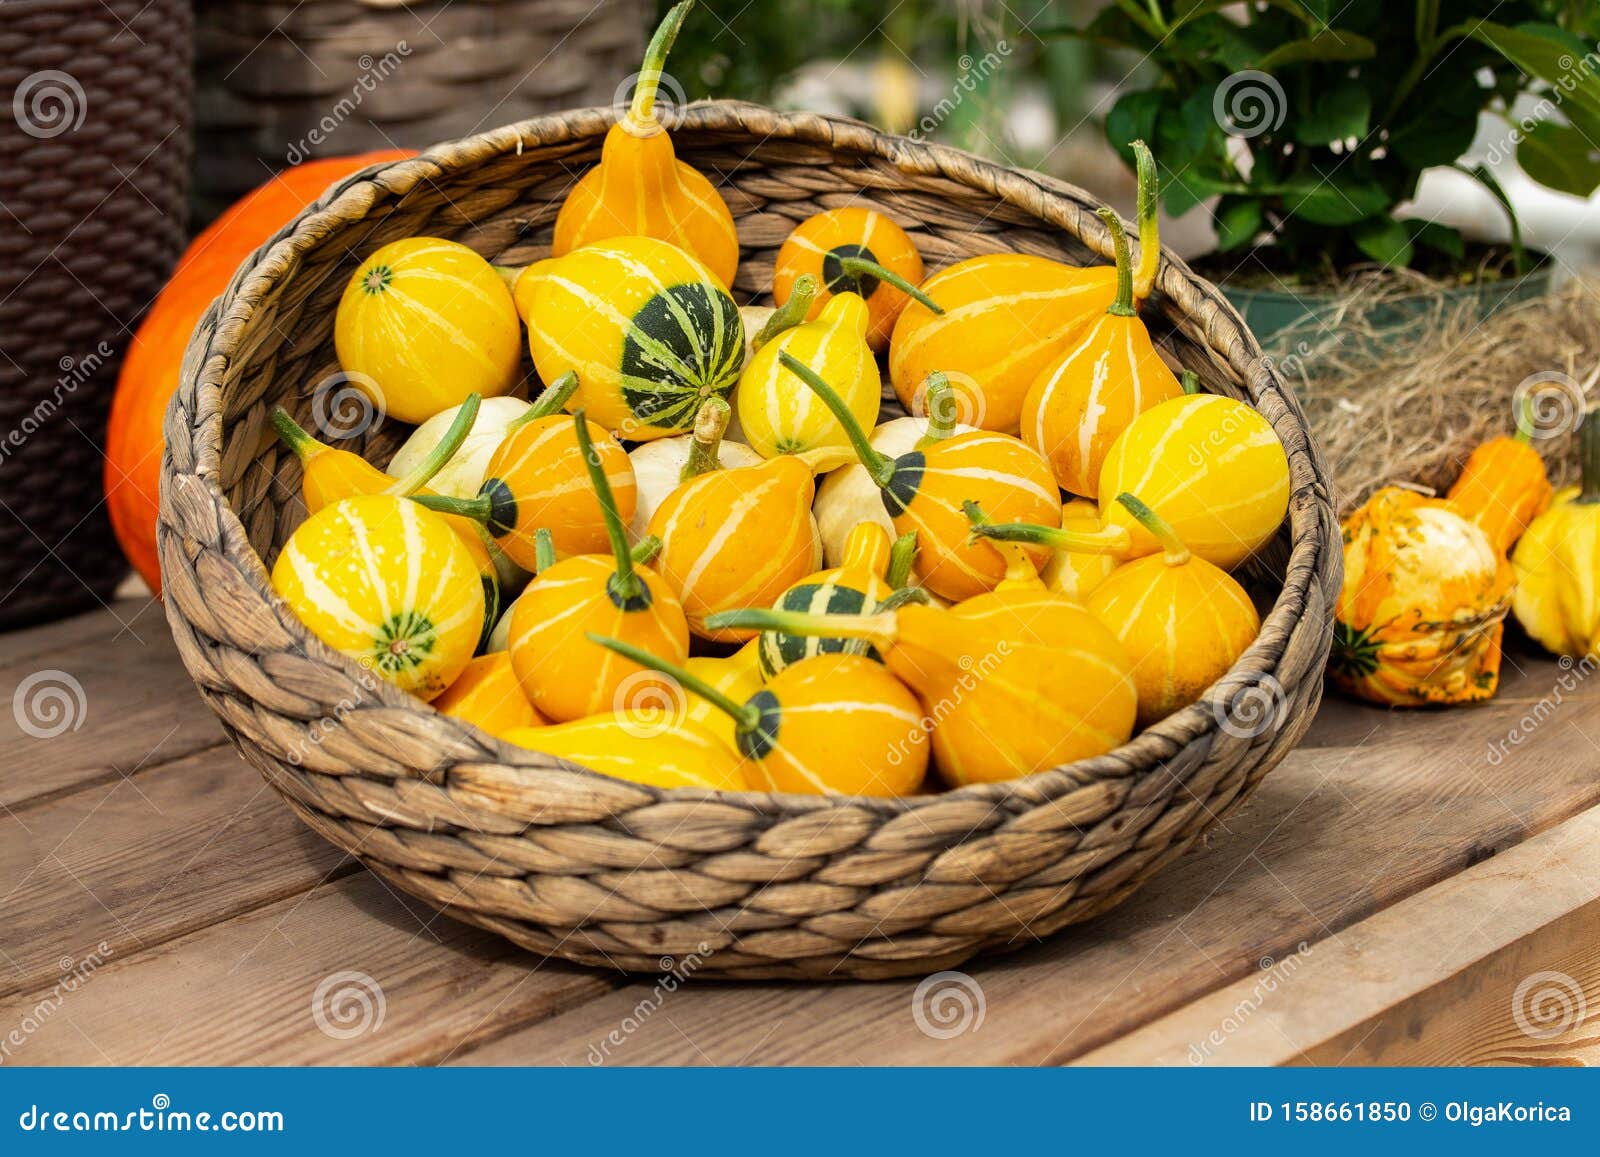 basket with decorative pumpkins kleine bicolor, pear-d two-color ripe pumpkin in a wicker bowl on a harvest festival